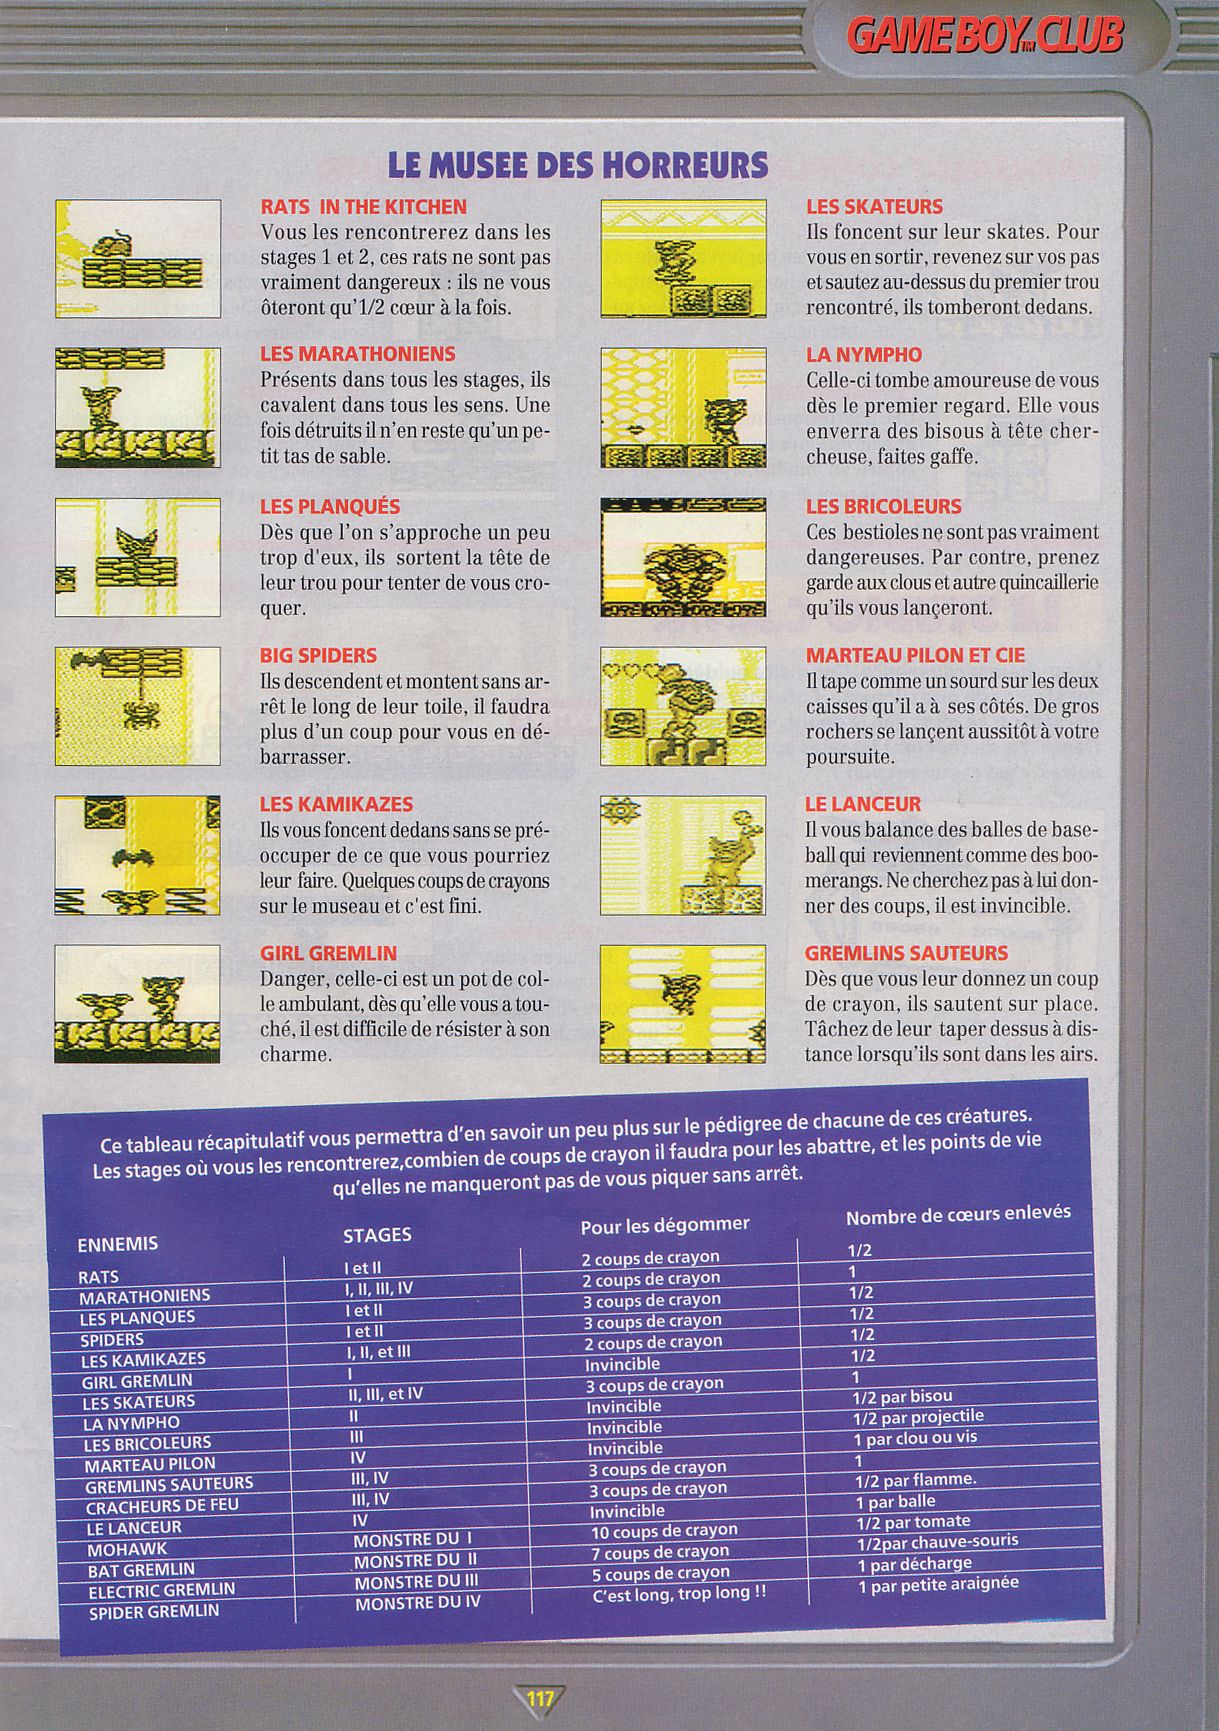 tests//813/Nintendo Player 007 - Page 117 (1992-11-12).jpg